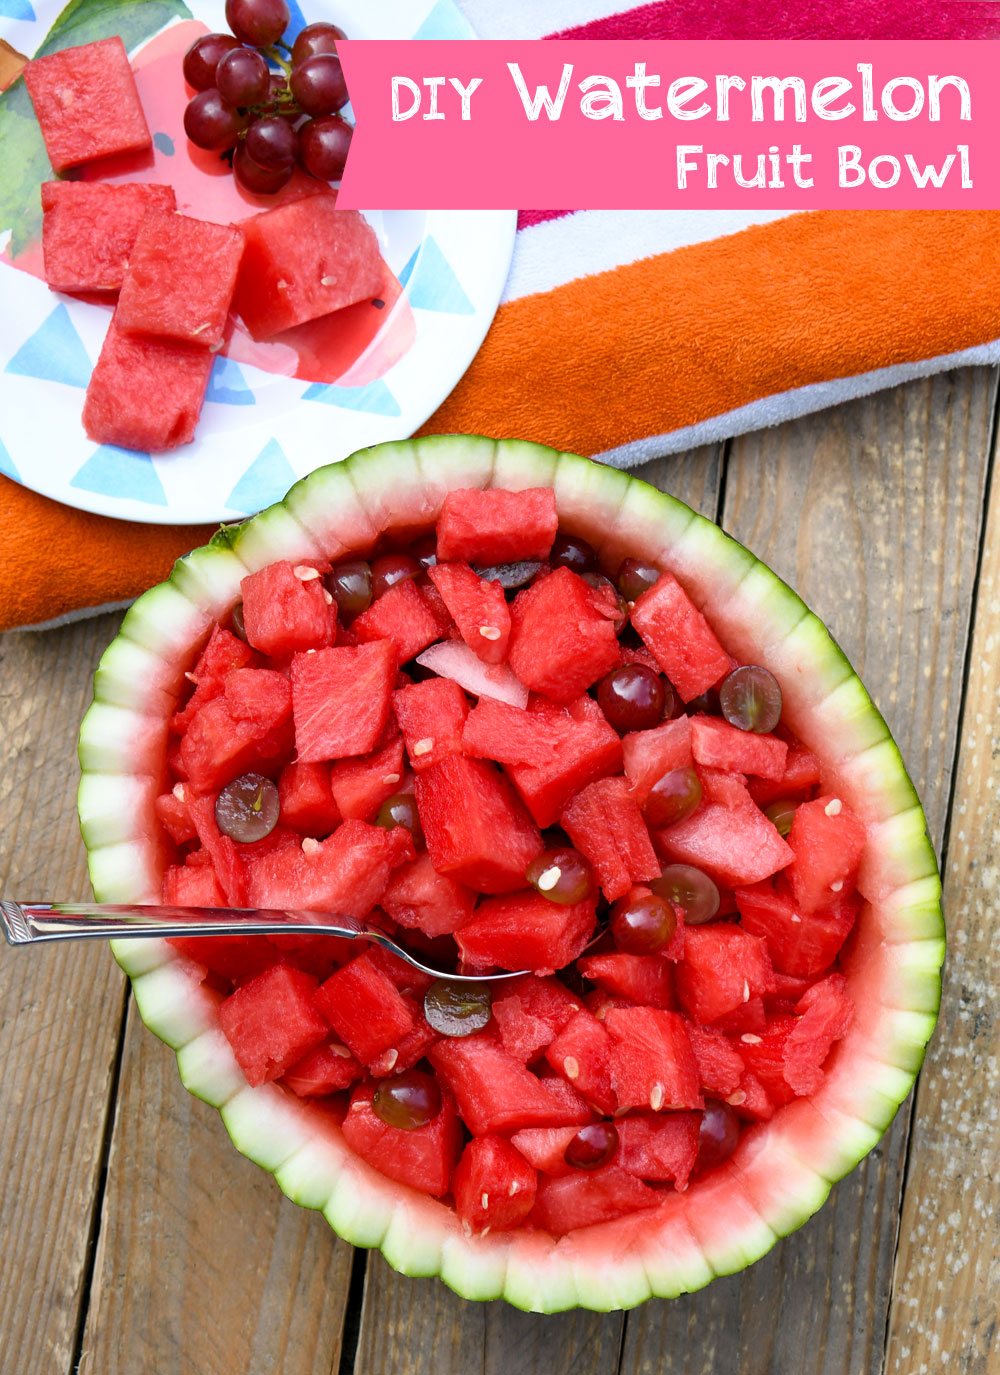 DIY watermelon fruit bowl cutting tips